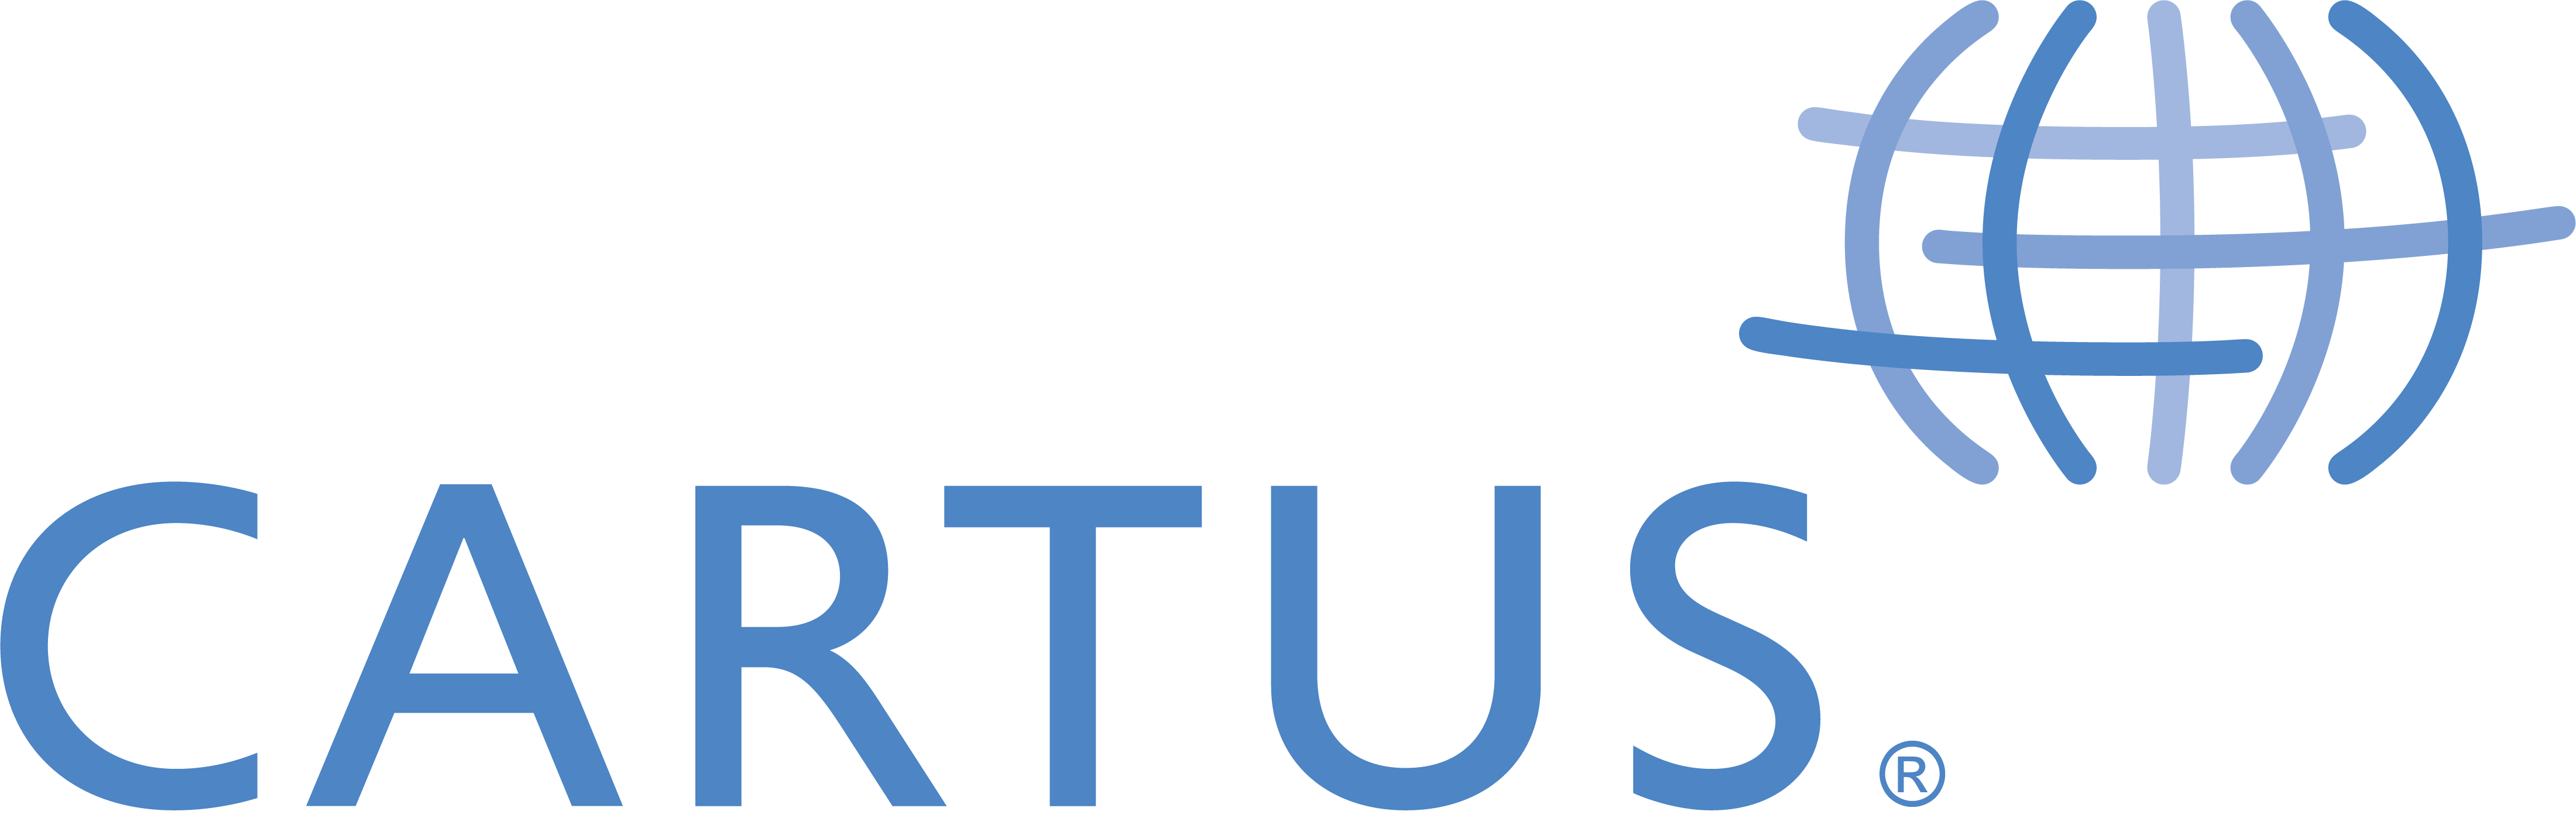 CARTUS_Logo_BLUE